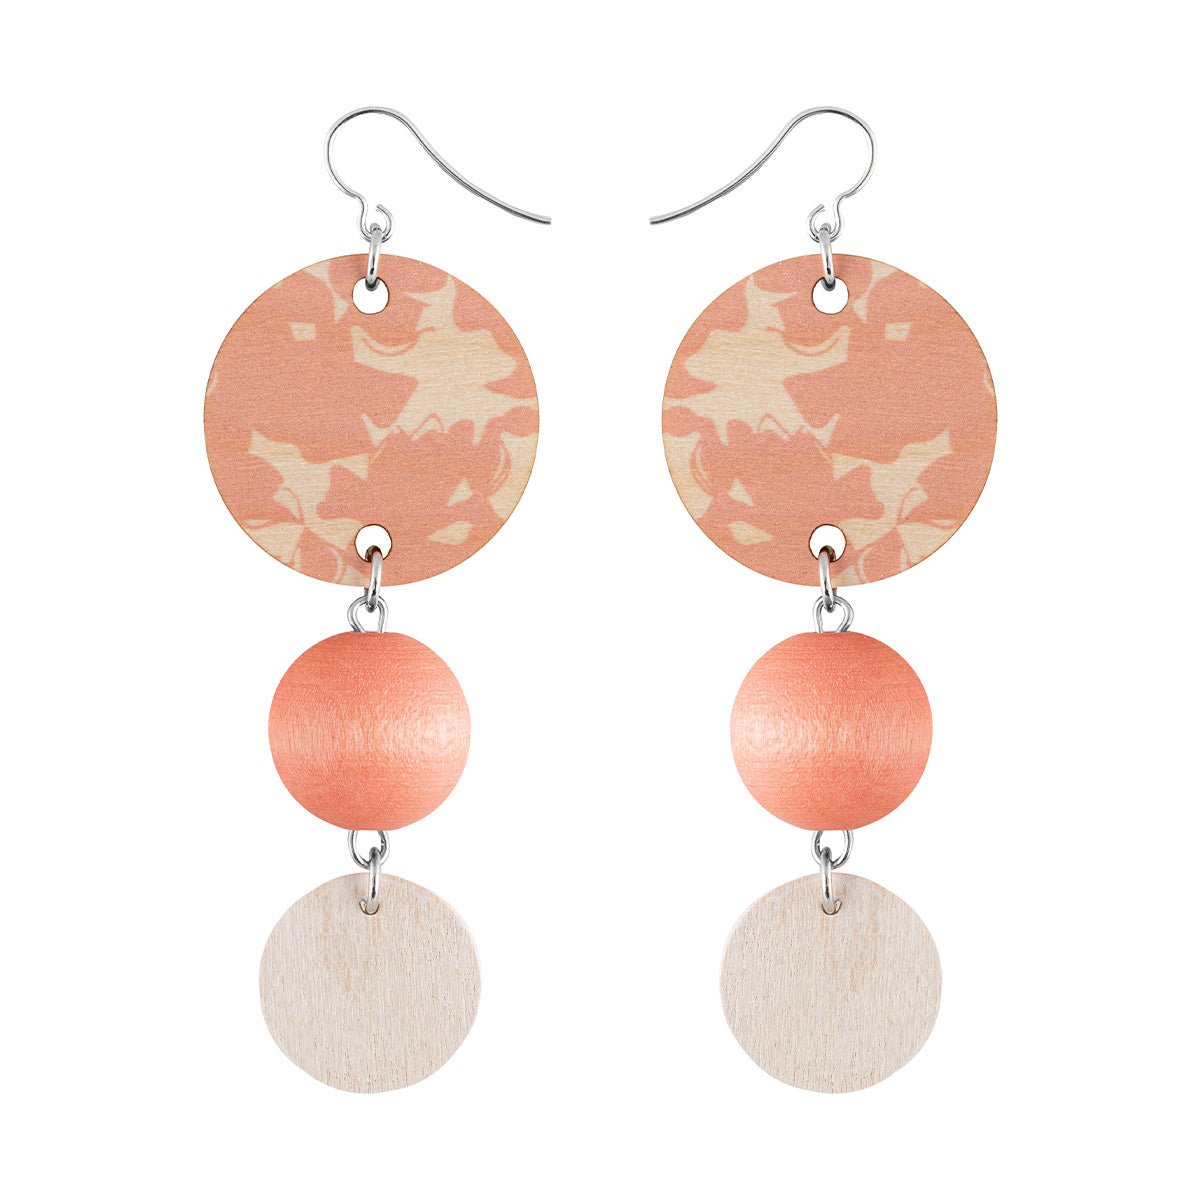 Apollo earrings, orange